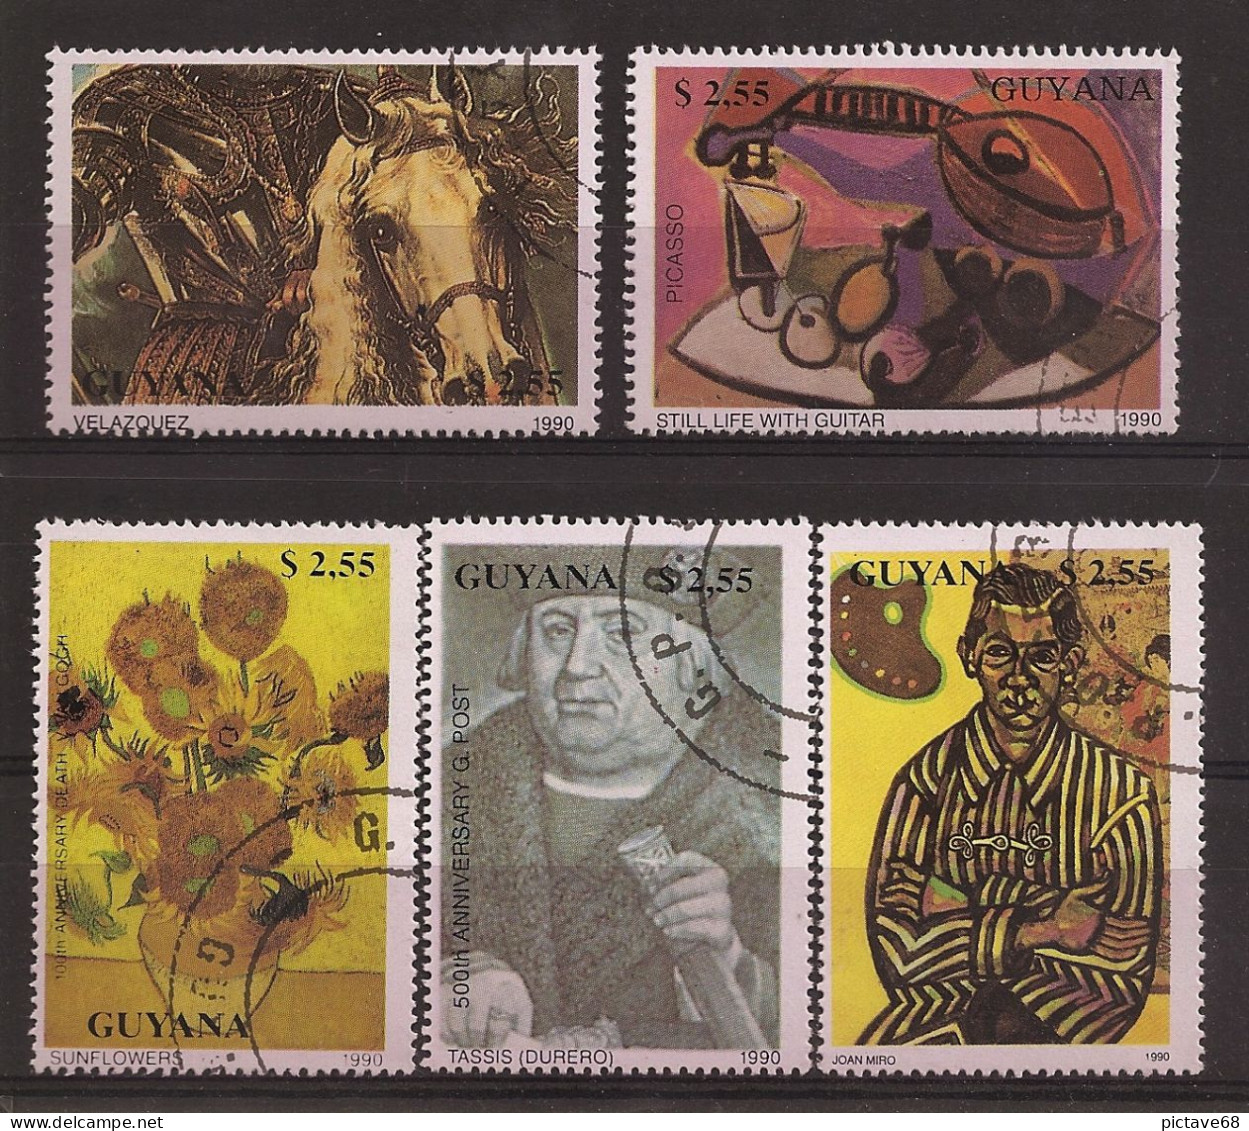 GUYANA / PEINTURE 1990 SERIE N° 2350 à 2354 OBLITERES - Impressionisme